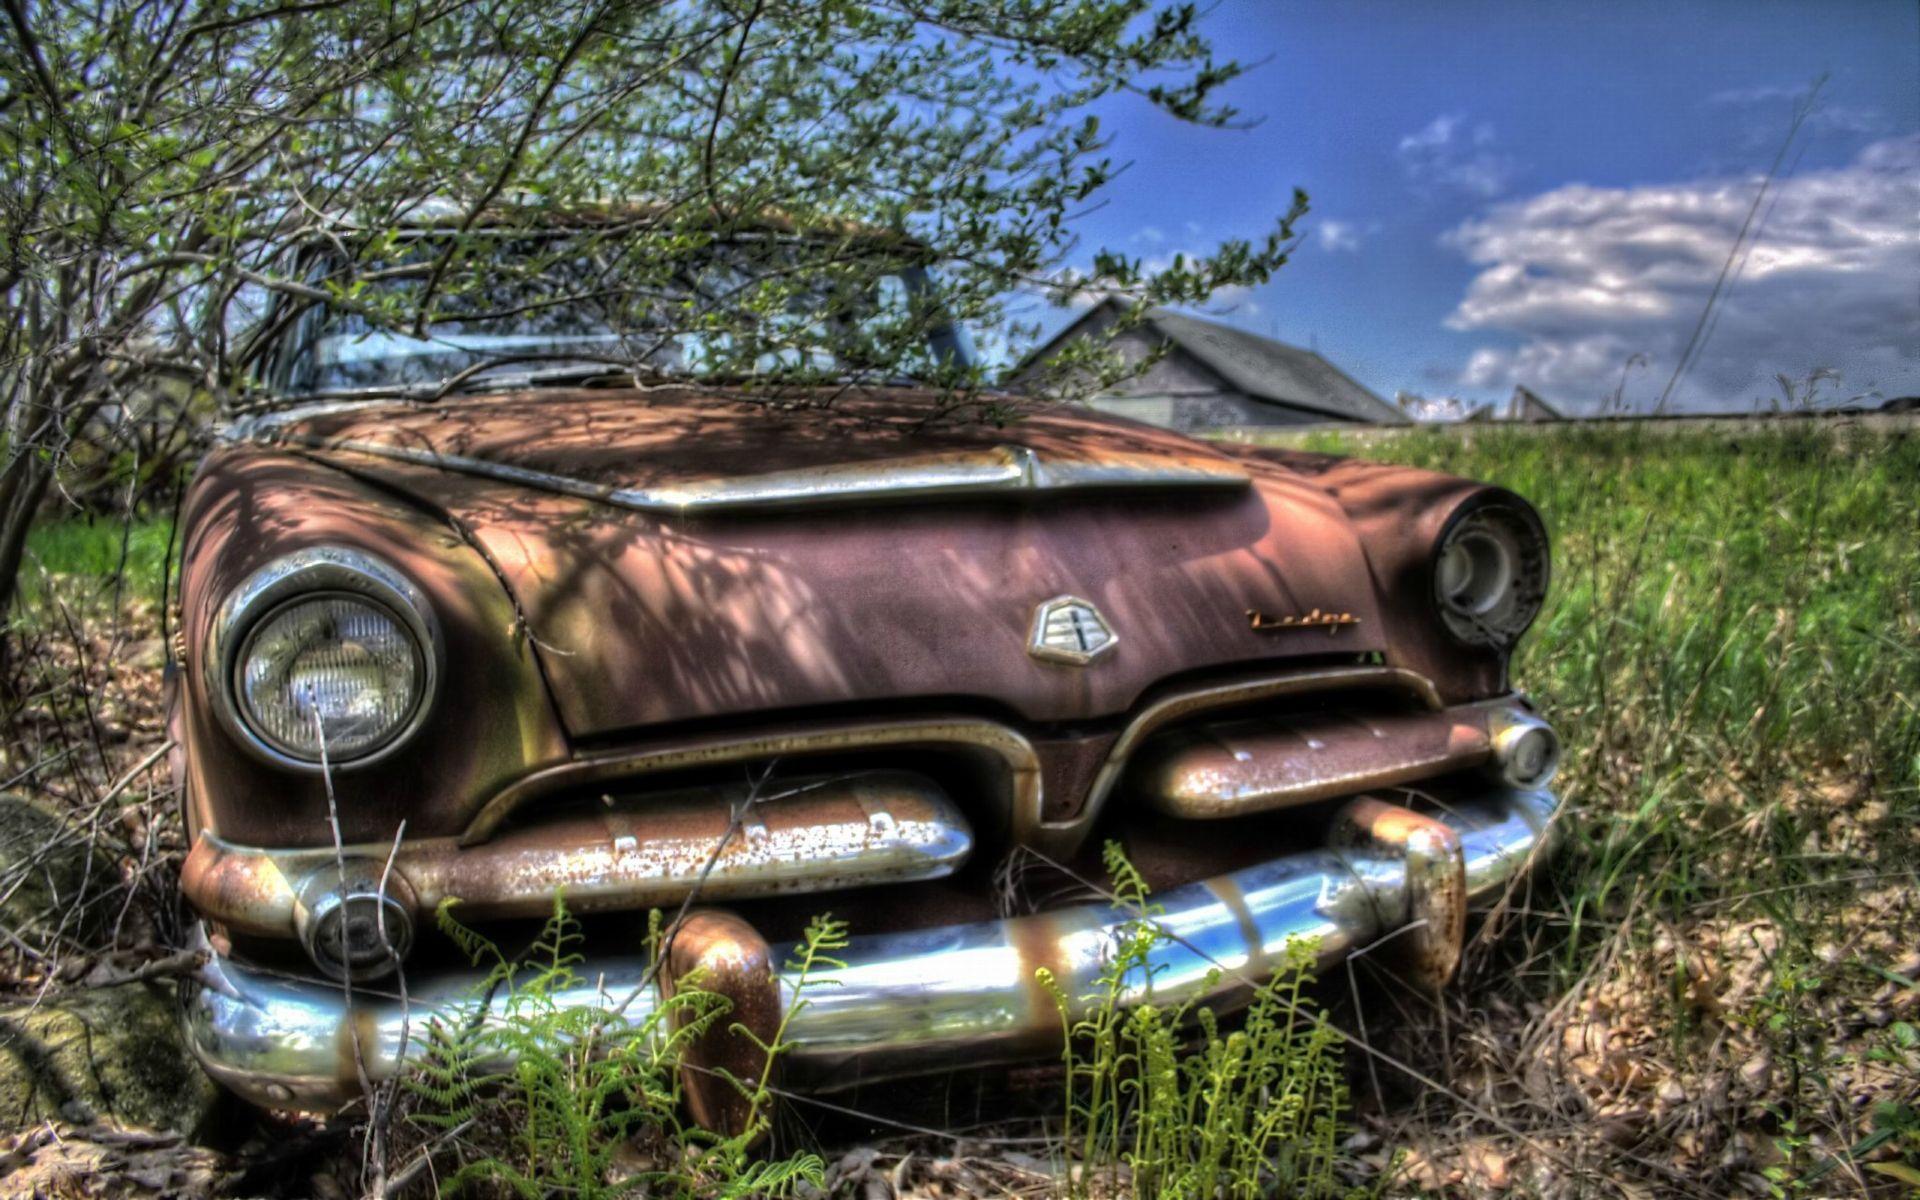 Rust on the car фото 67